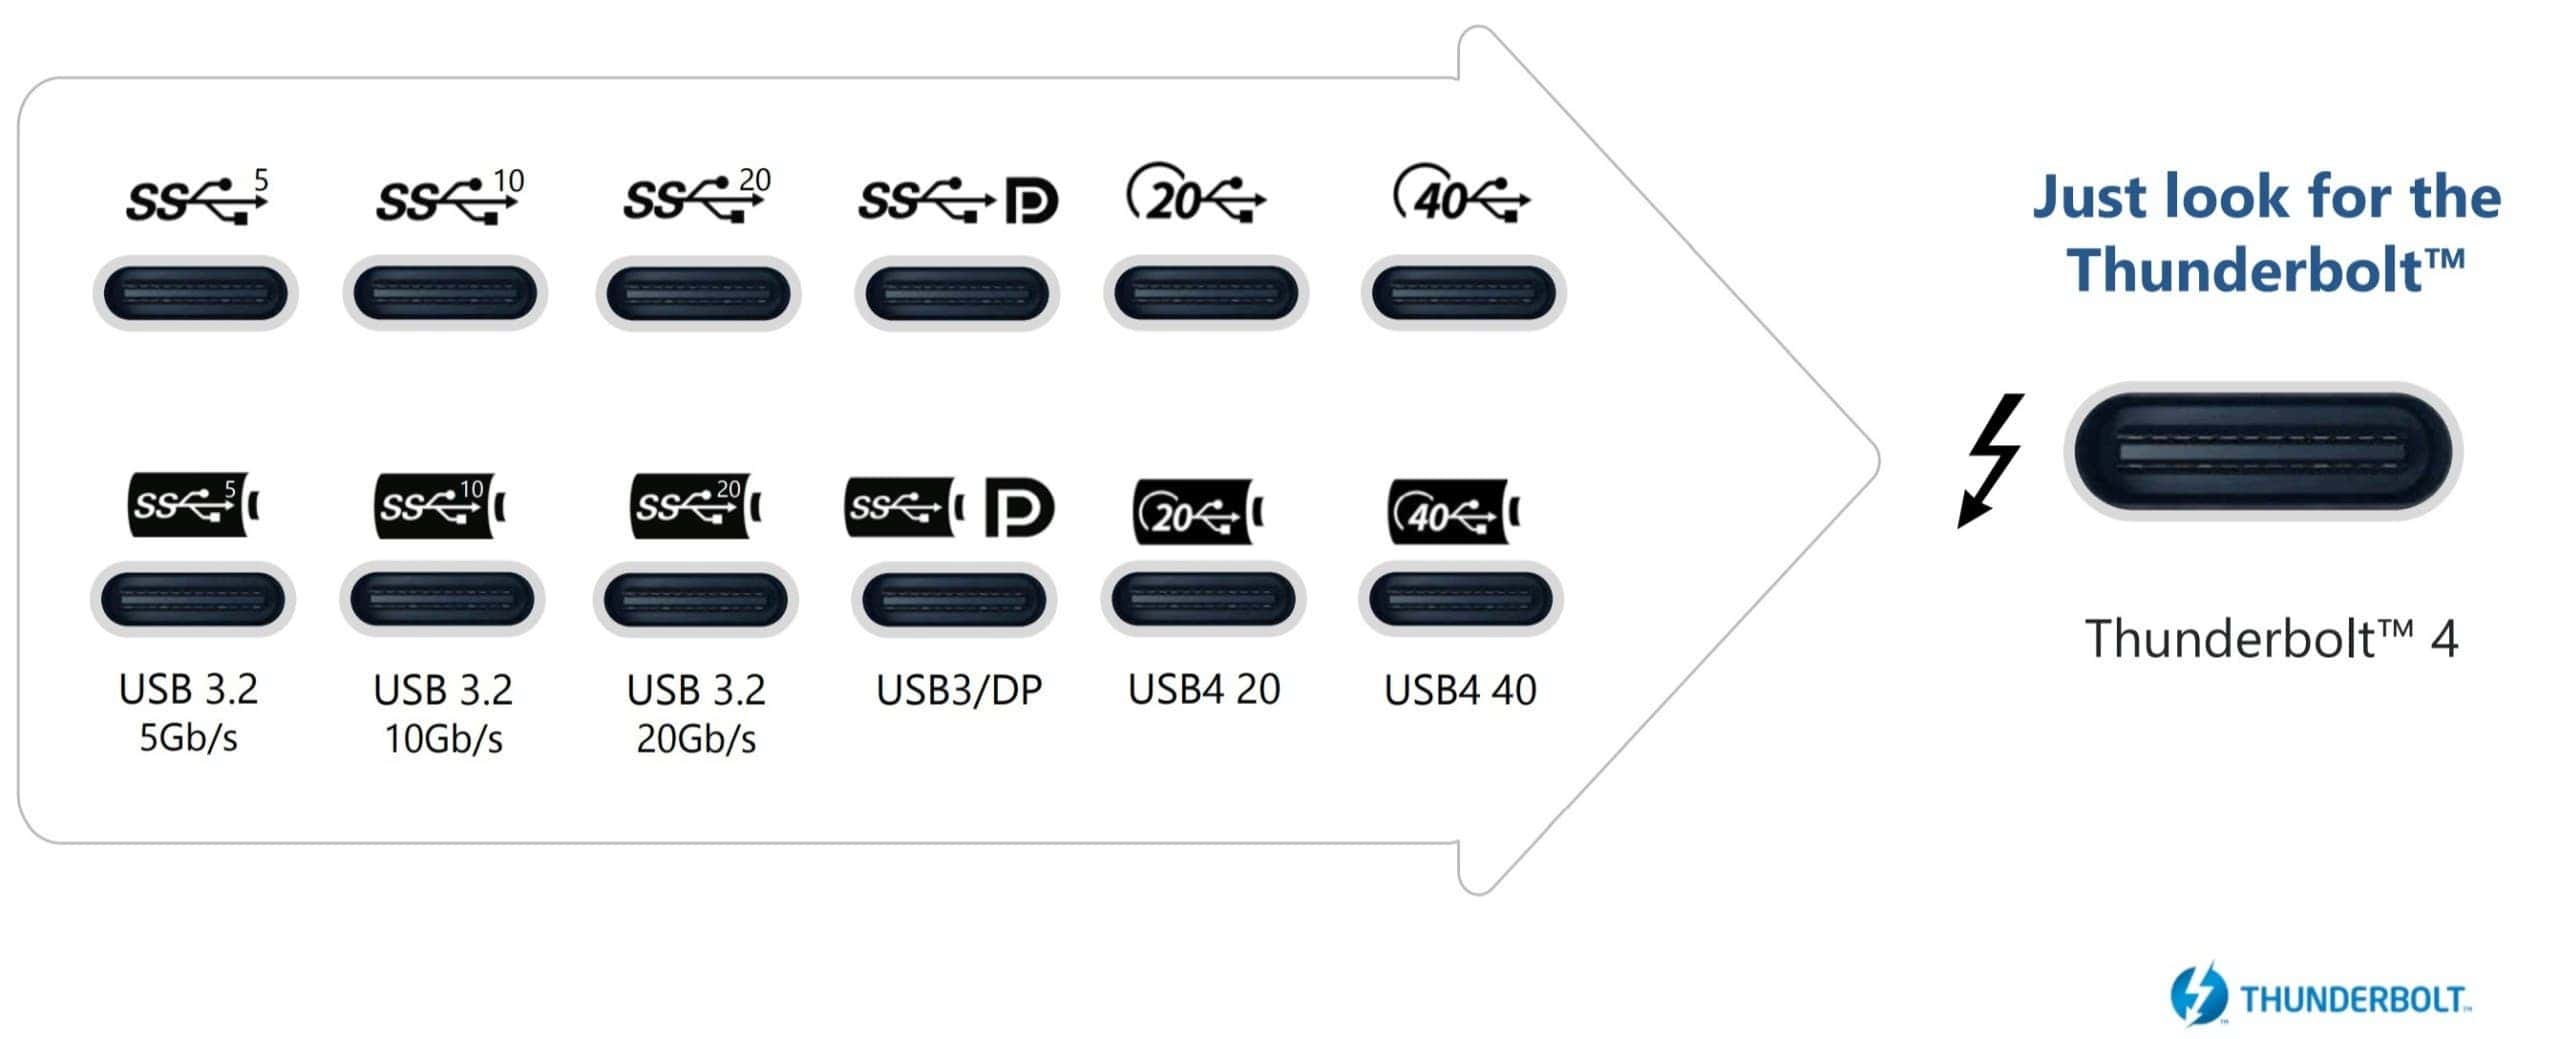 USB-C